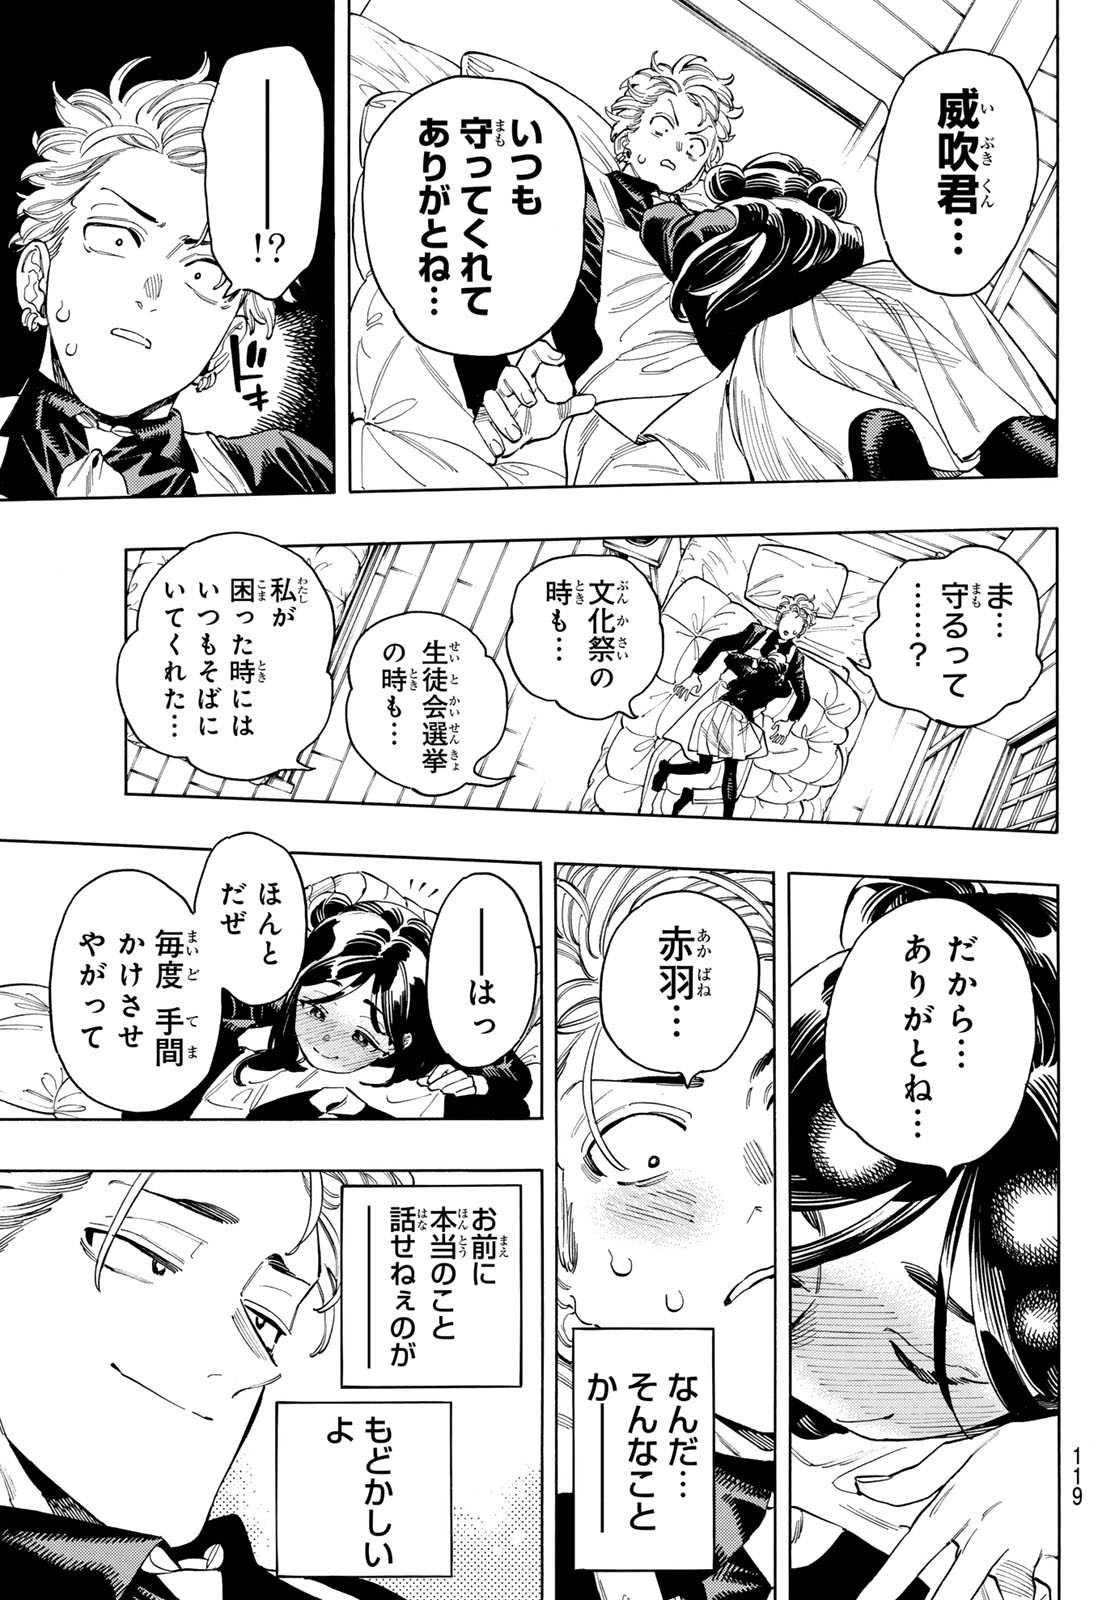 Akabane Honeko no Bodyguard - Chapter 87 - Page 8